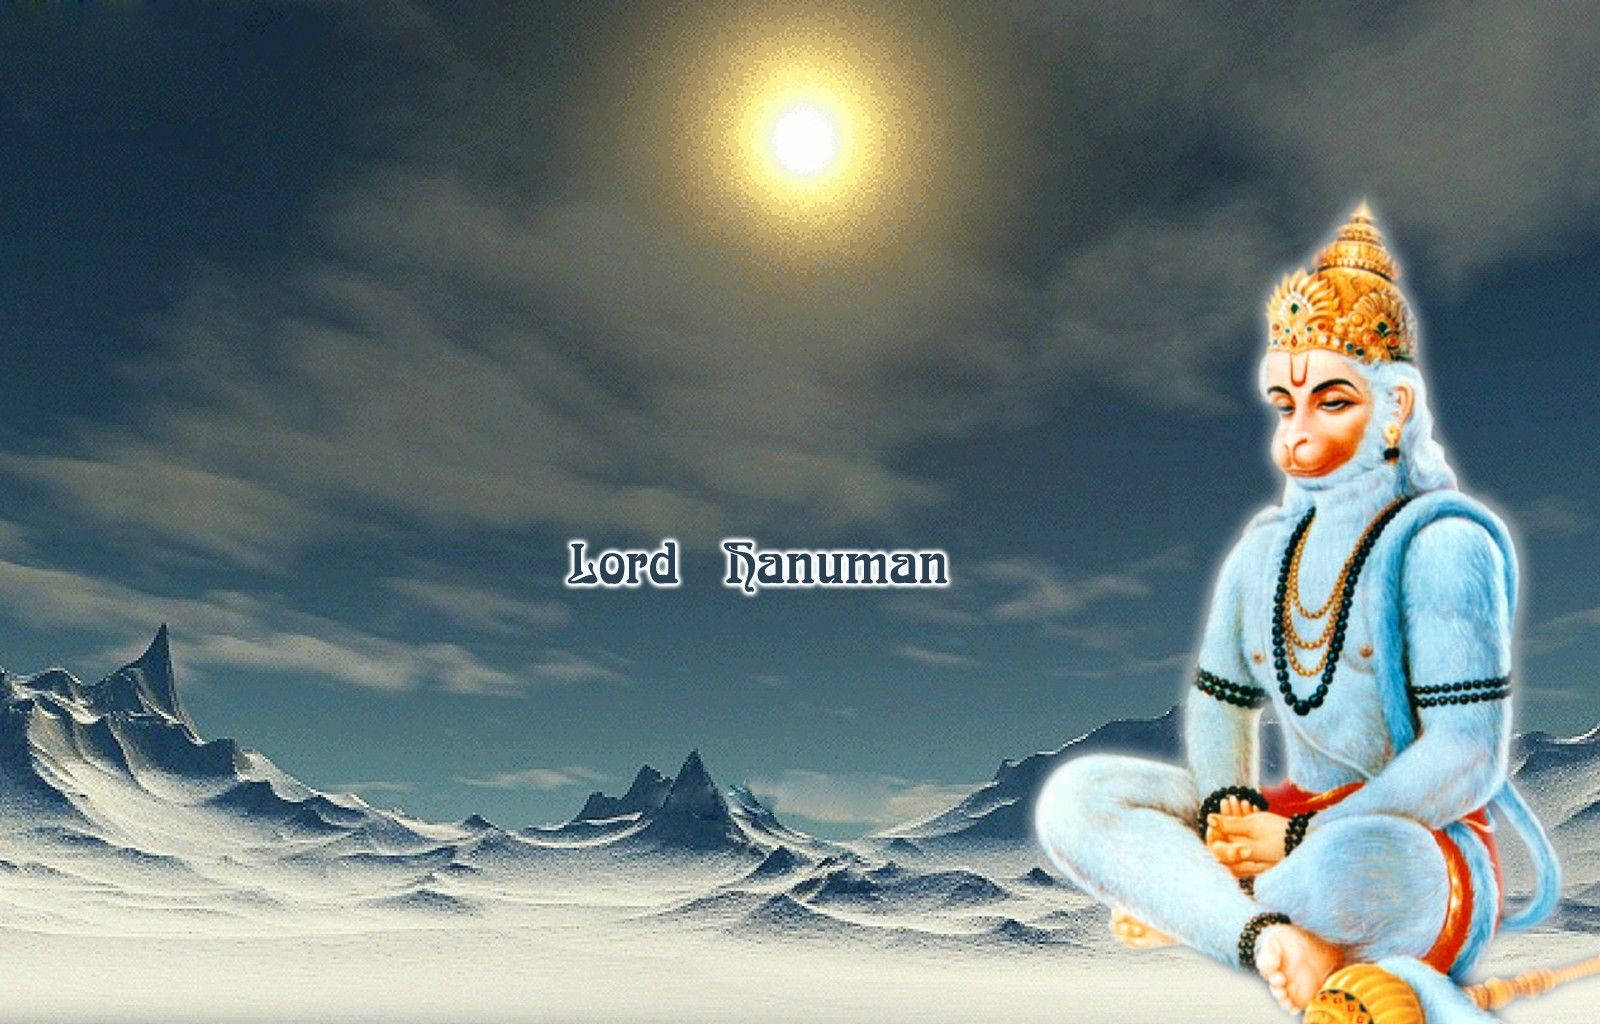 Hanuman On Snow Mountain 4k Hd